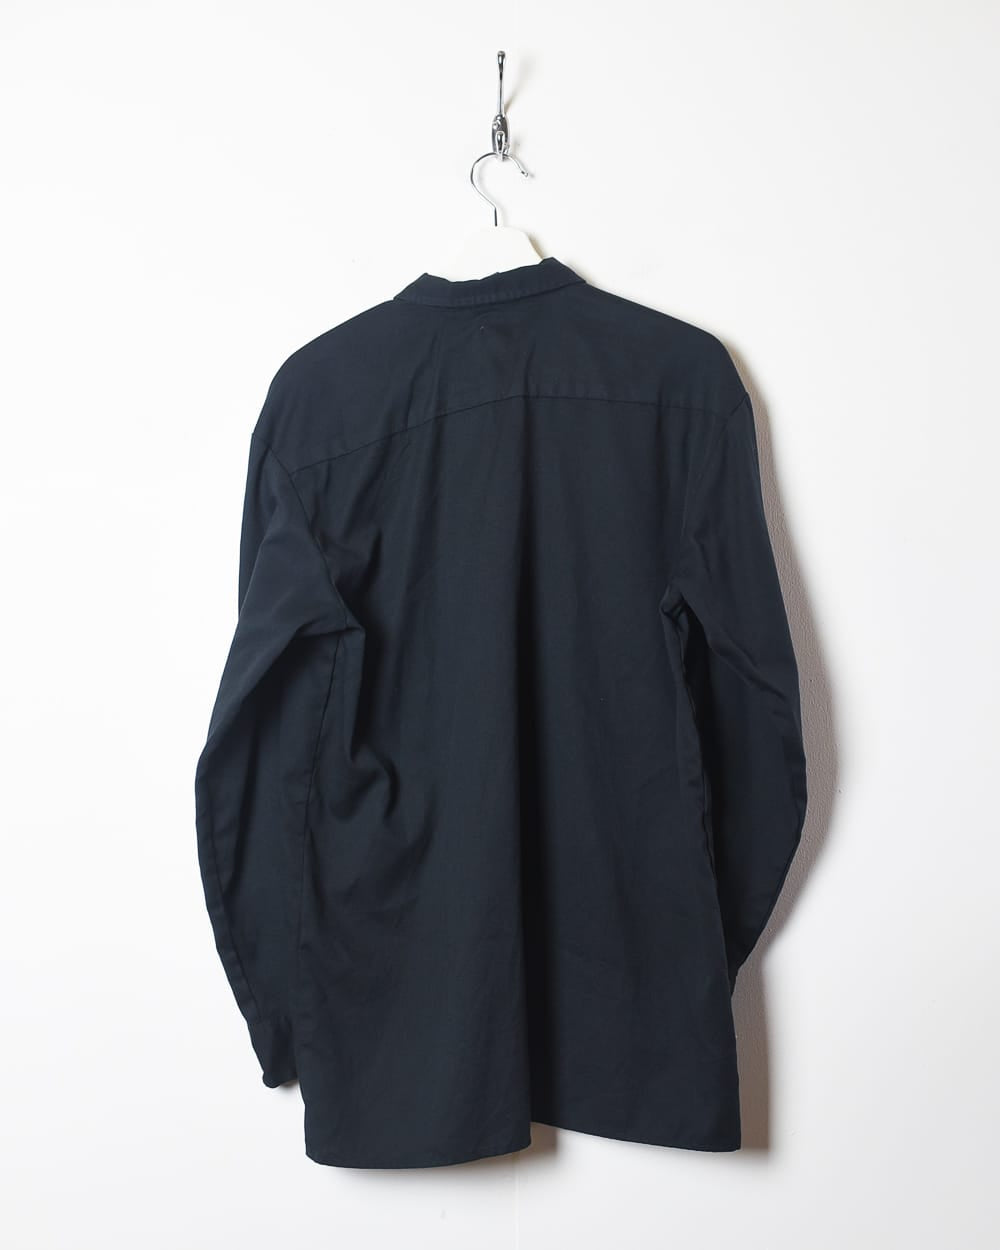 Black Dickies Flex Shirt - Medium